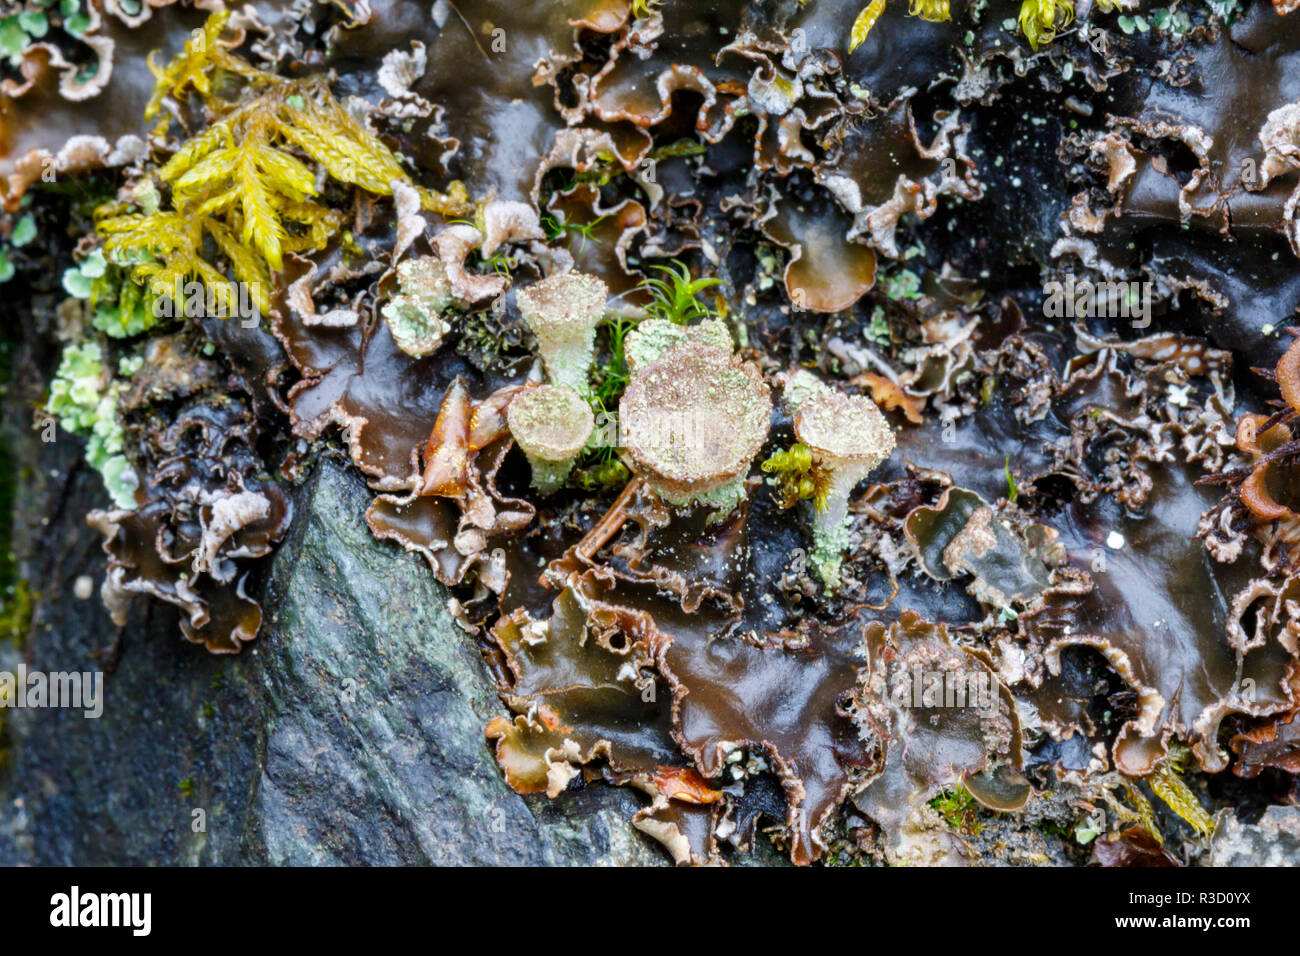 USA, Alaska. Close-up of a variety of lichen on a boulder in Southcentral Alaska. Stock Photo